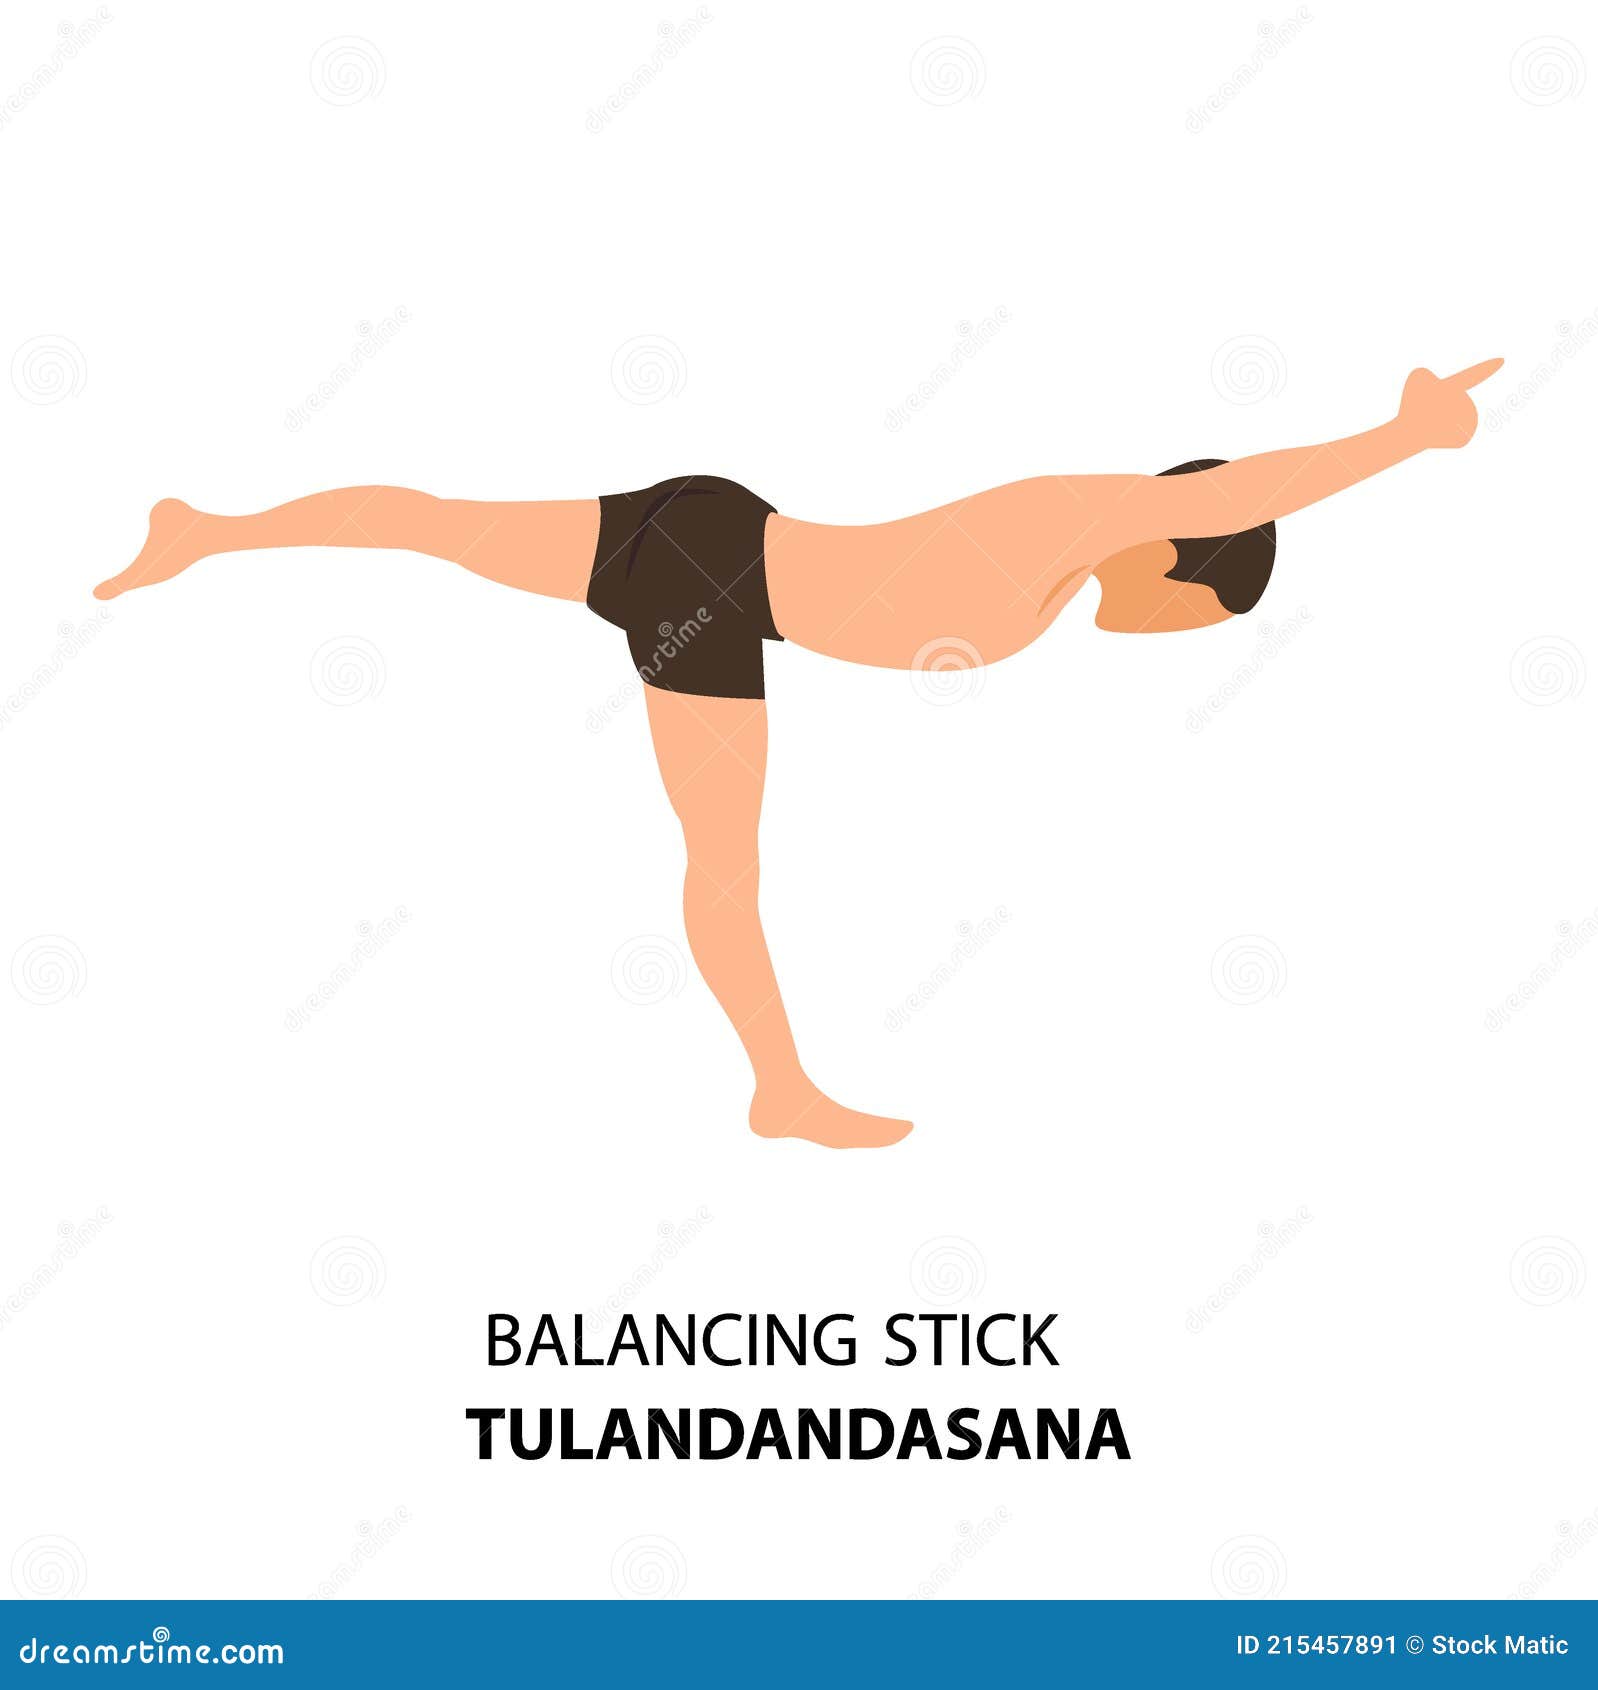 Man Doing Yoga Balancing Stick Pose or Tulandandasana Stock Vector -  Illustration of person, design: 215457891